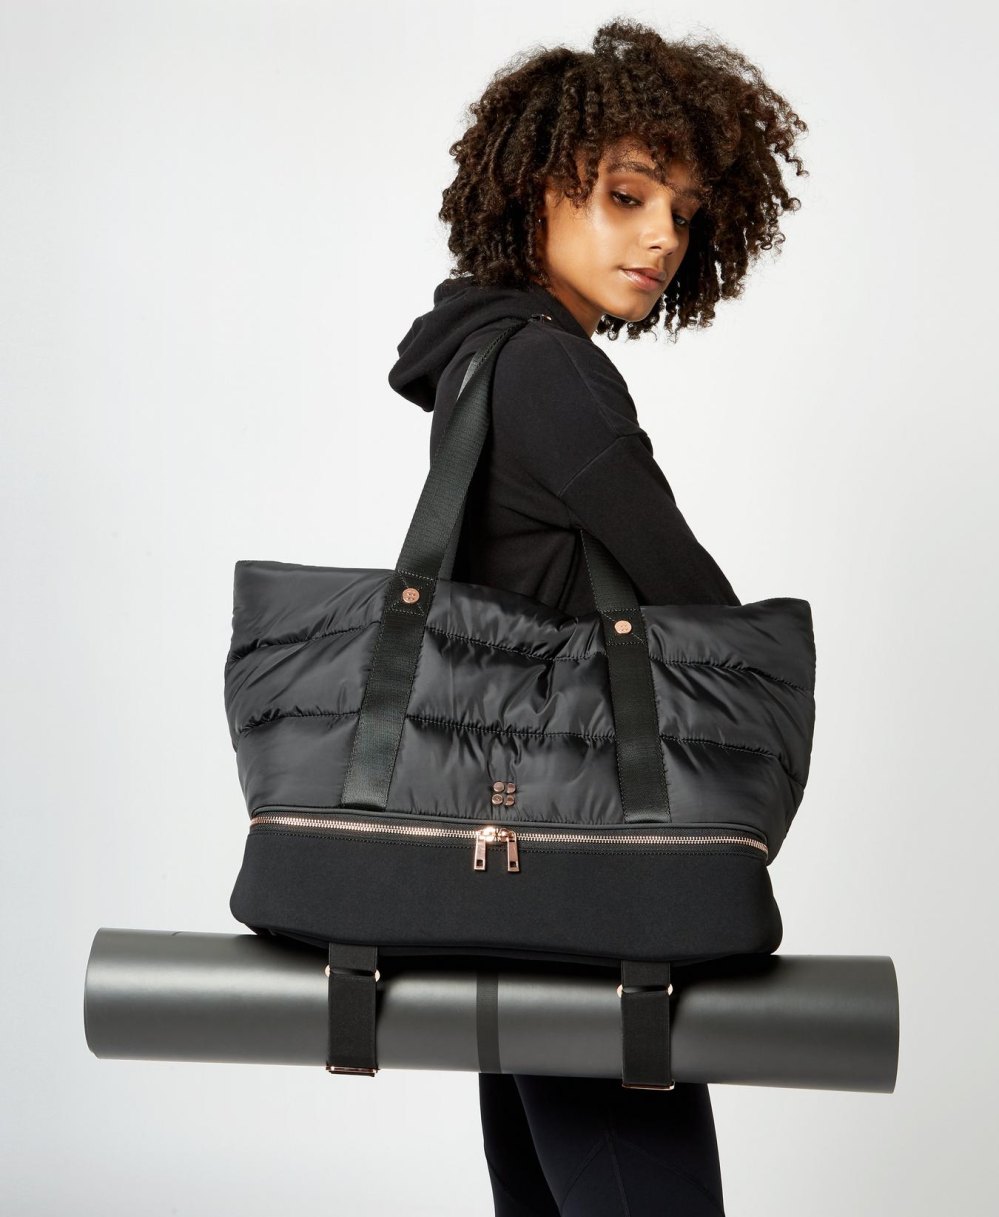 Sweaty Betty Black Tote Bags for Women